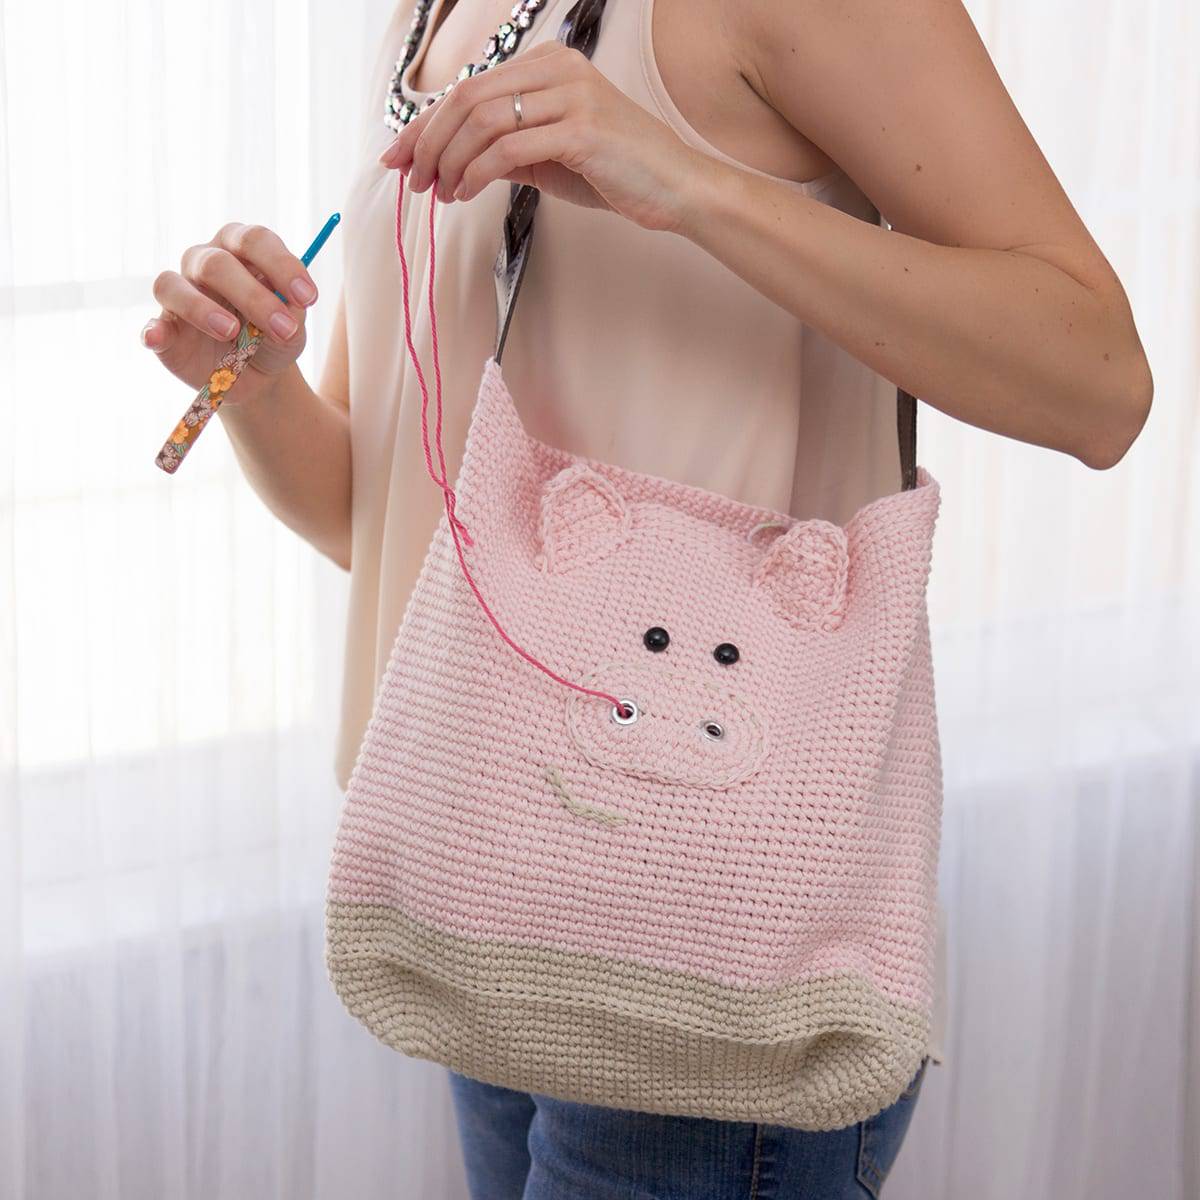 Pig Project Bag Pattern